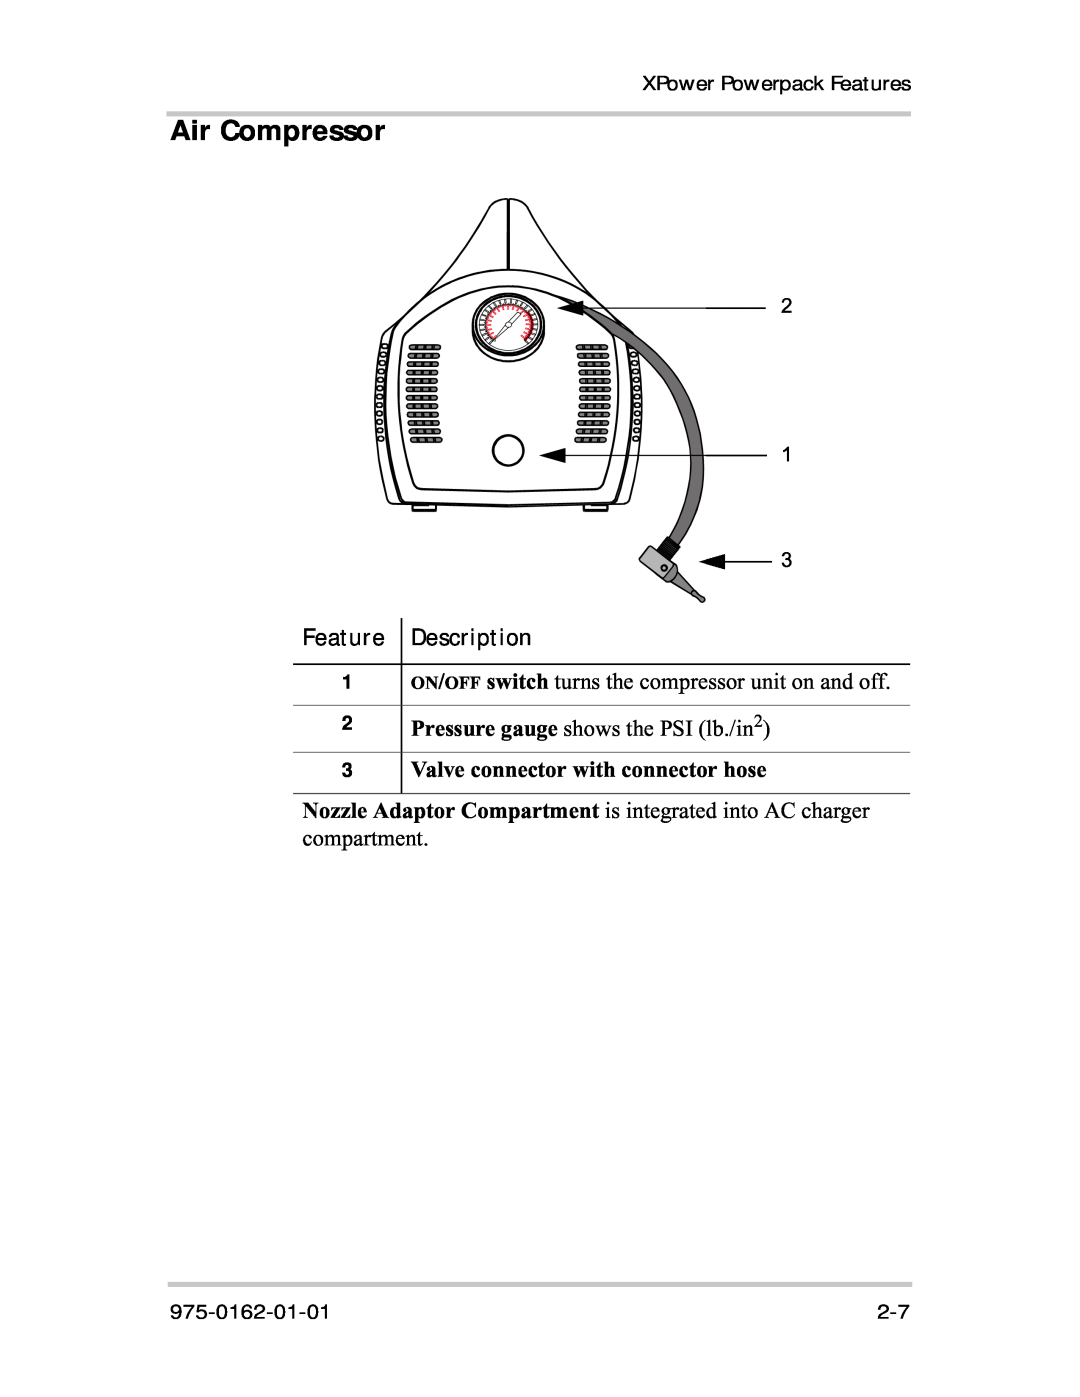 Xantrex Technology 400R manual Air Compressor, XPower Powerpack Features, Feature Description, 975-0162-01-01 